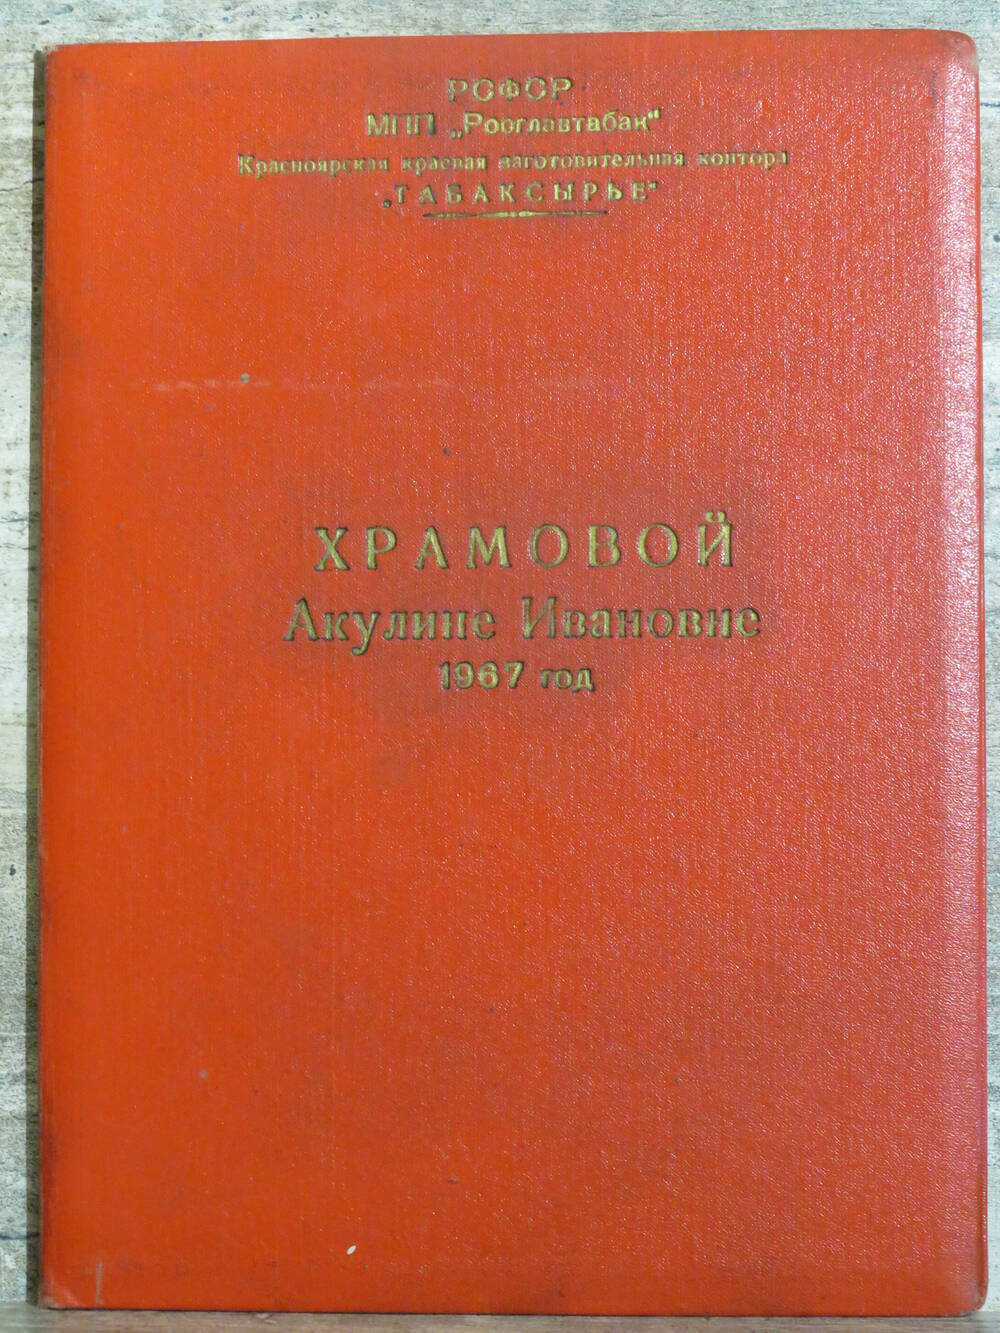 Почетная грамота Храмовой А. И. 12.07.1967г.